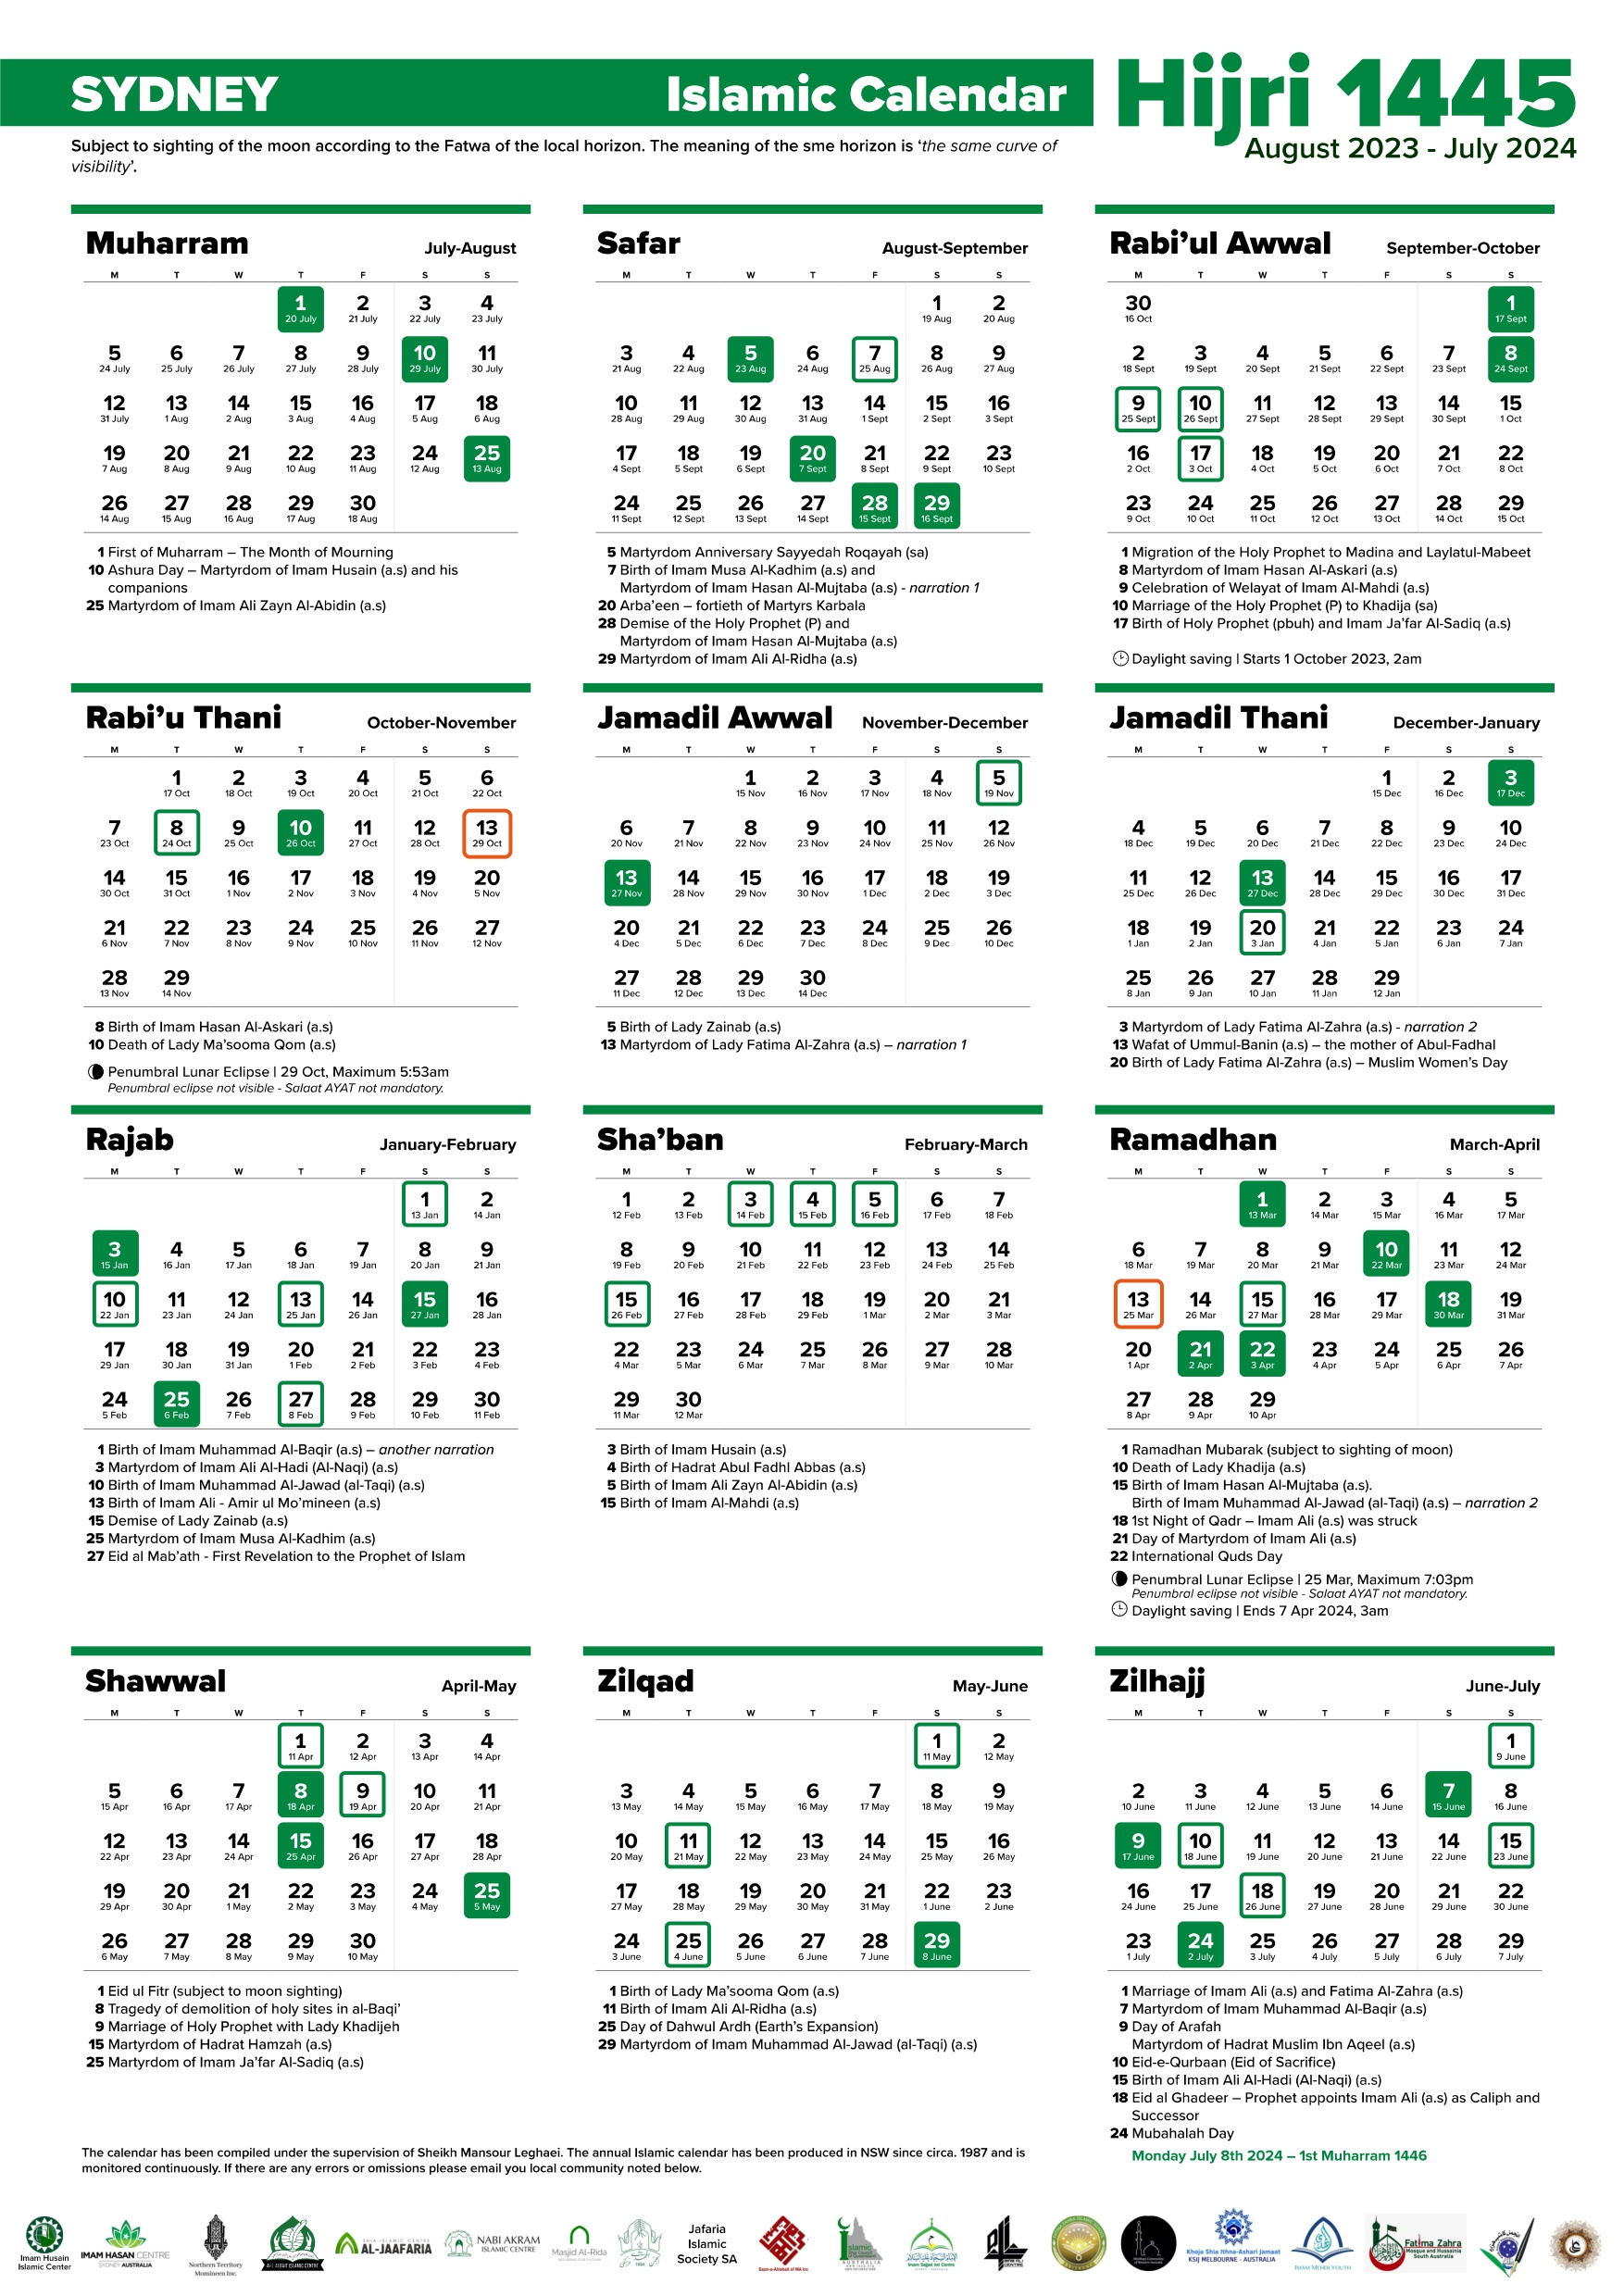 Annual Islamic Calendar 1445 Ah / 2023-2024 Ad – Imam Husain inside 9 July 2024 in Islamic Calendar